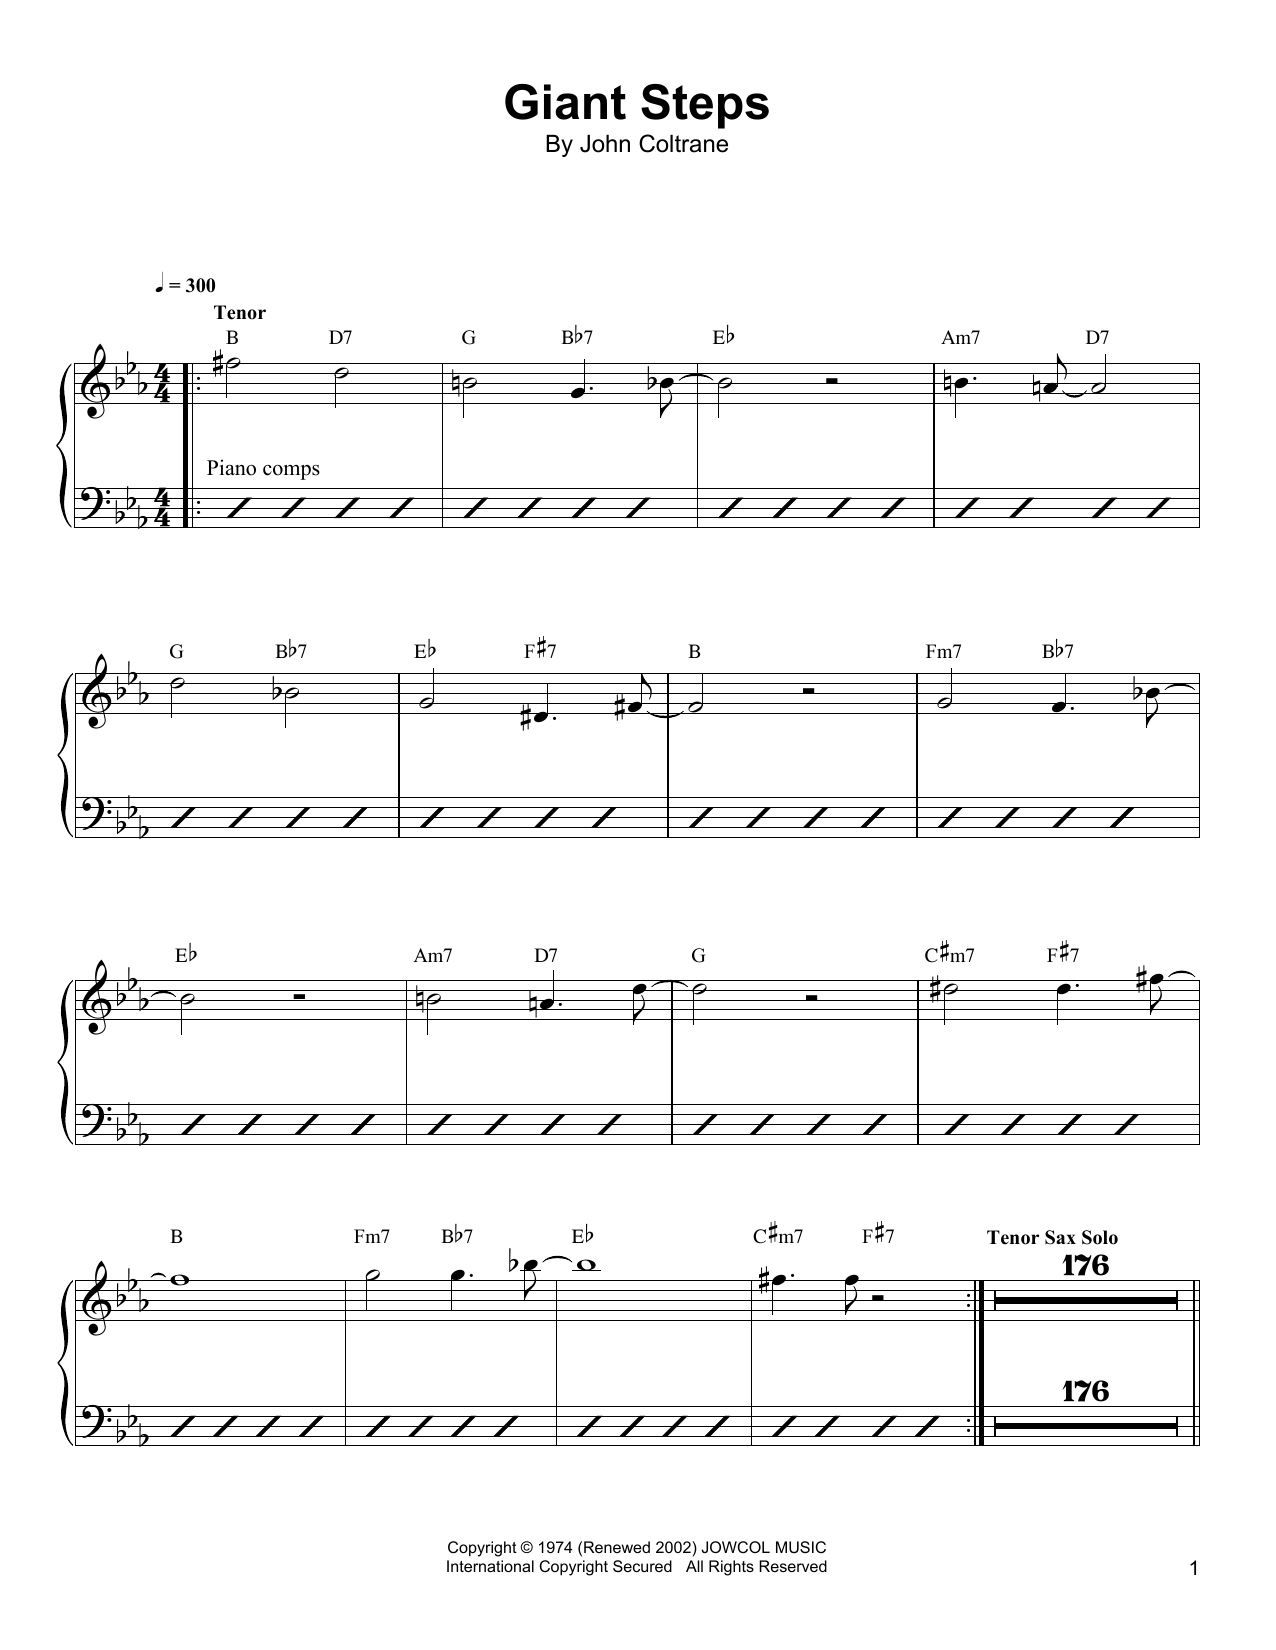 John Coltrane Giant Steps Sheet Music Notes & Chords for Tenor Sax Transcription - Download or Print PDF